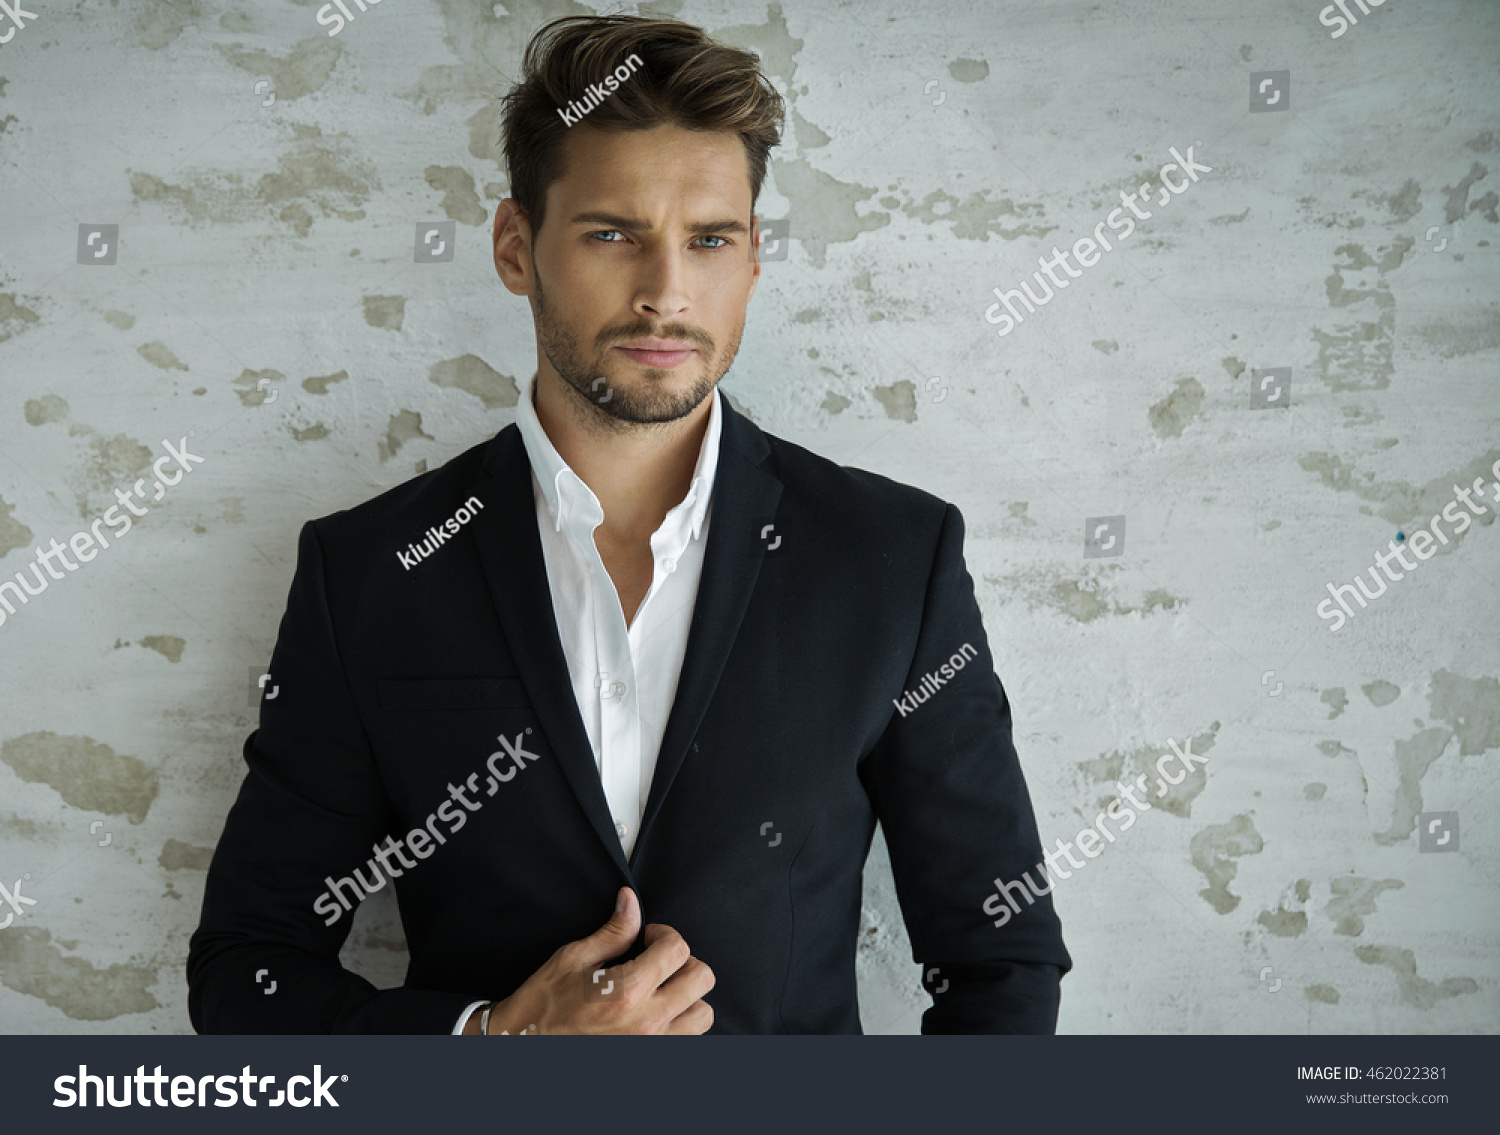 Portrait Sexy Man Black Suit Stock Photo 462022381 | Shutterstock